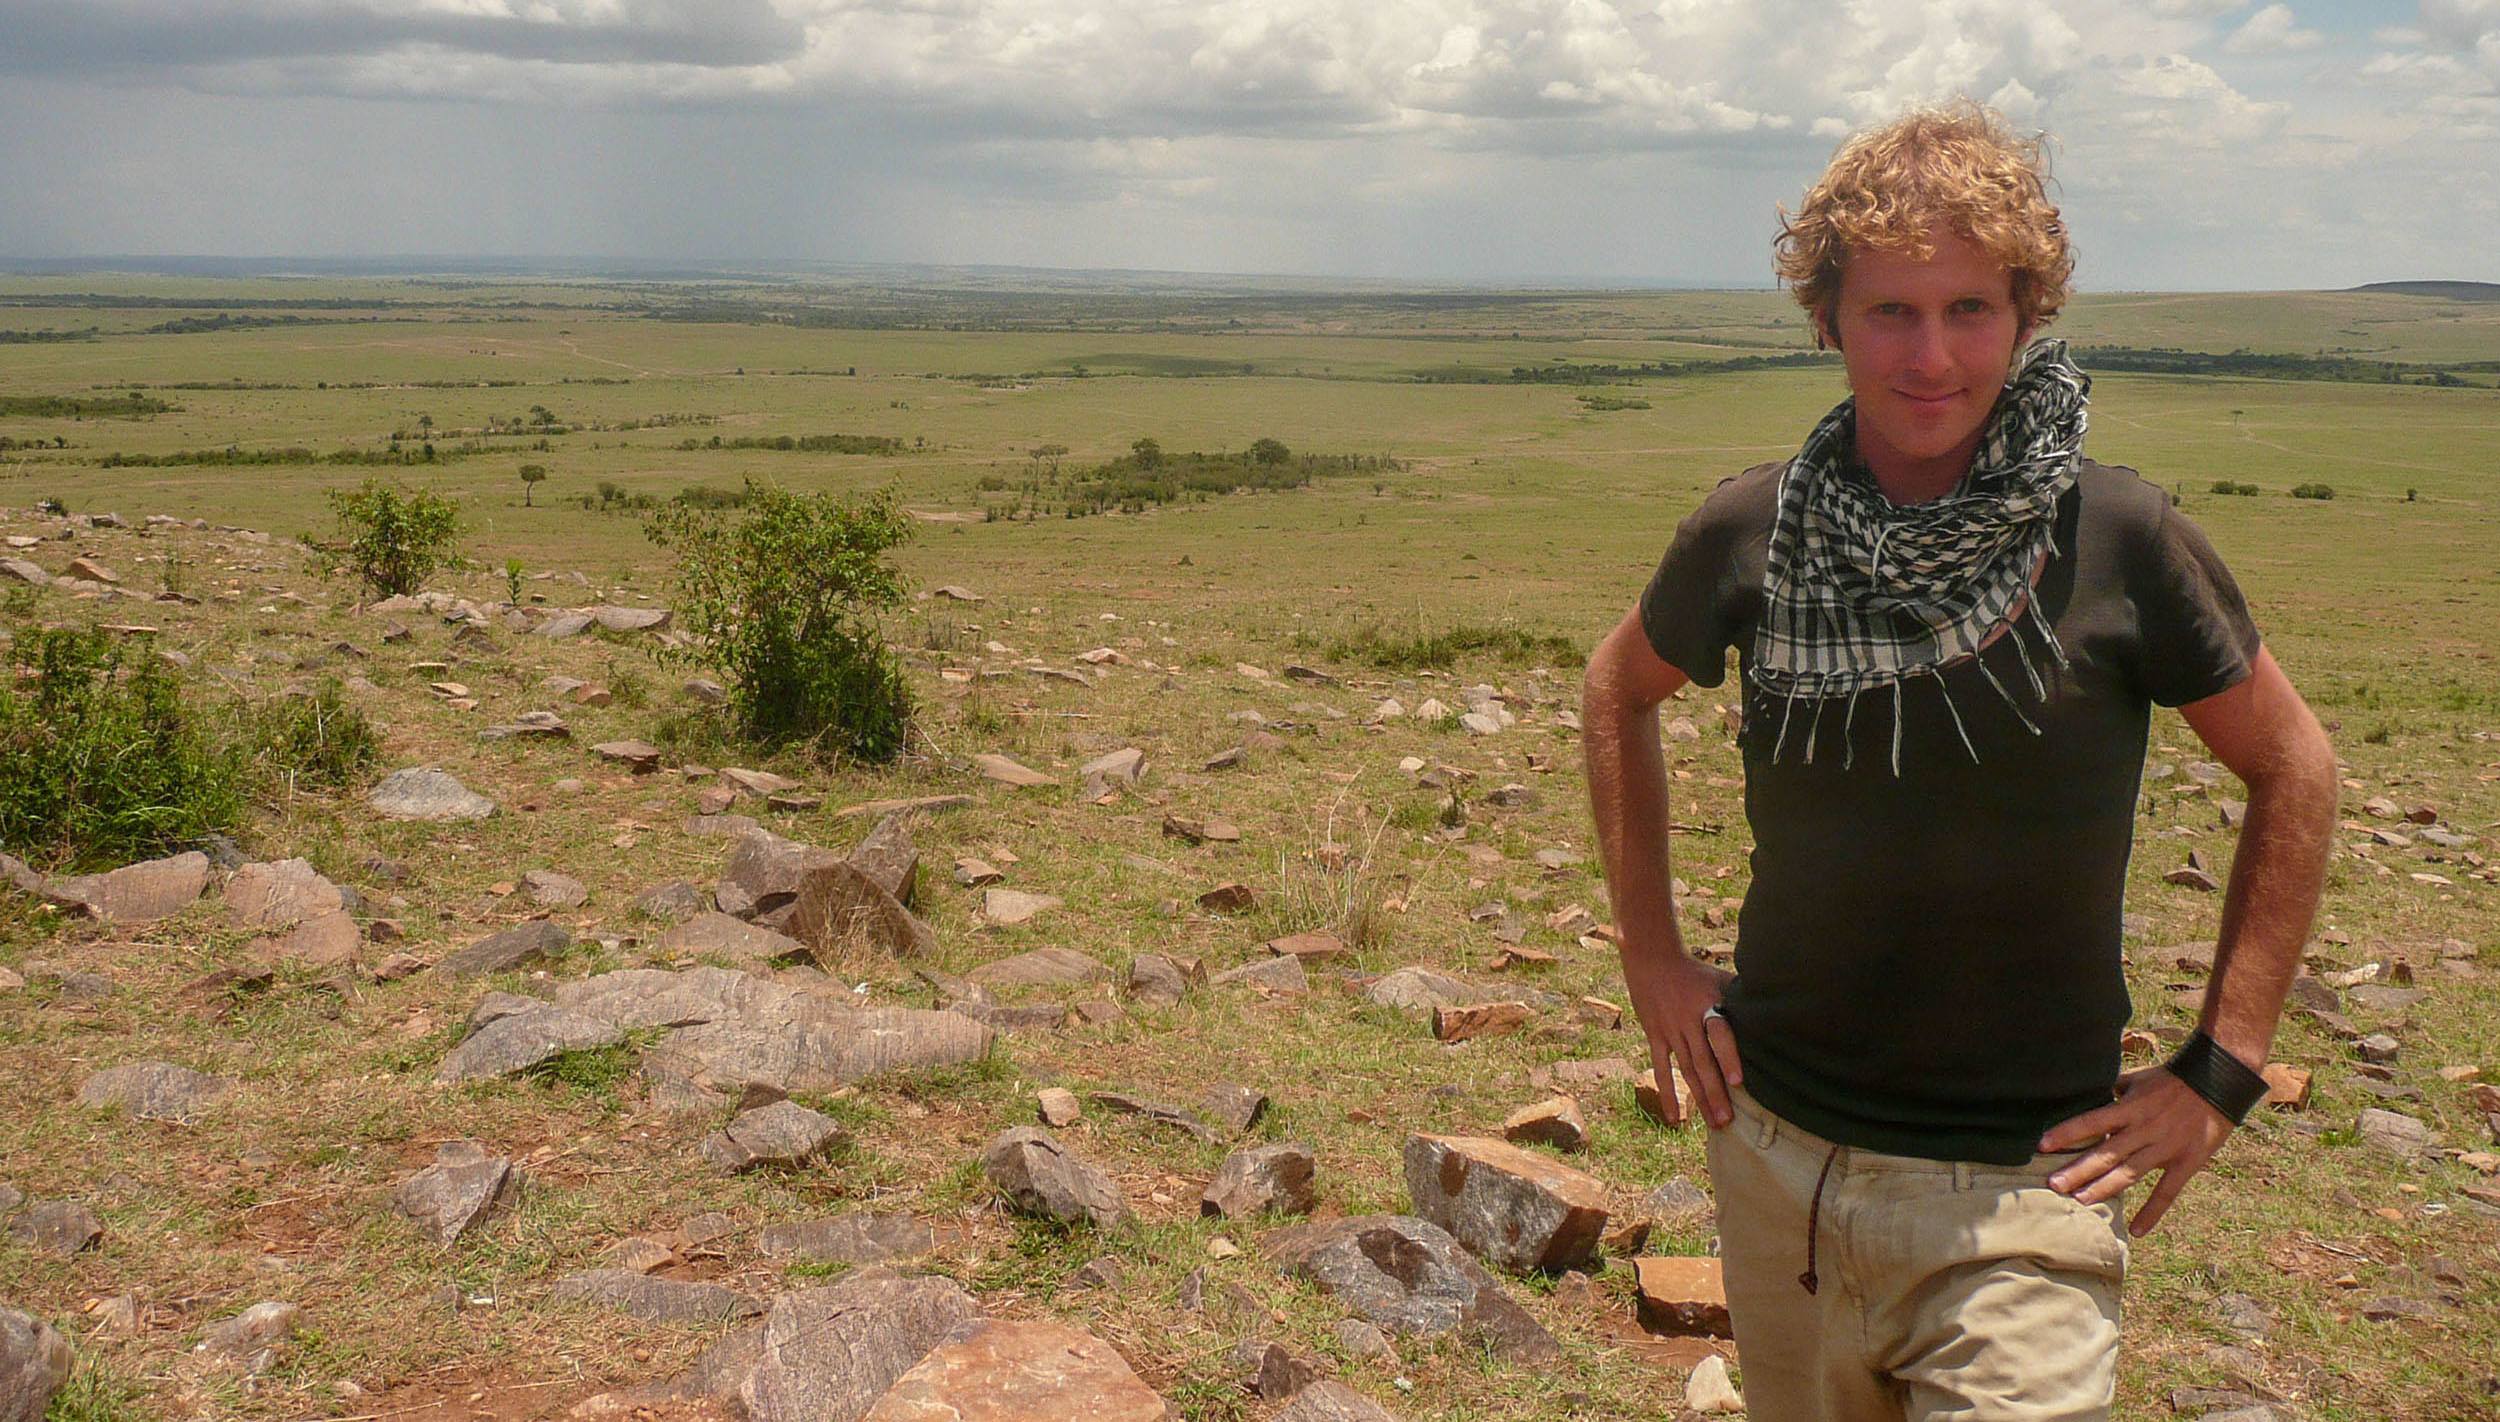 Ben posing in the Maasai Mara Kenya